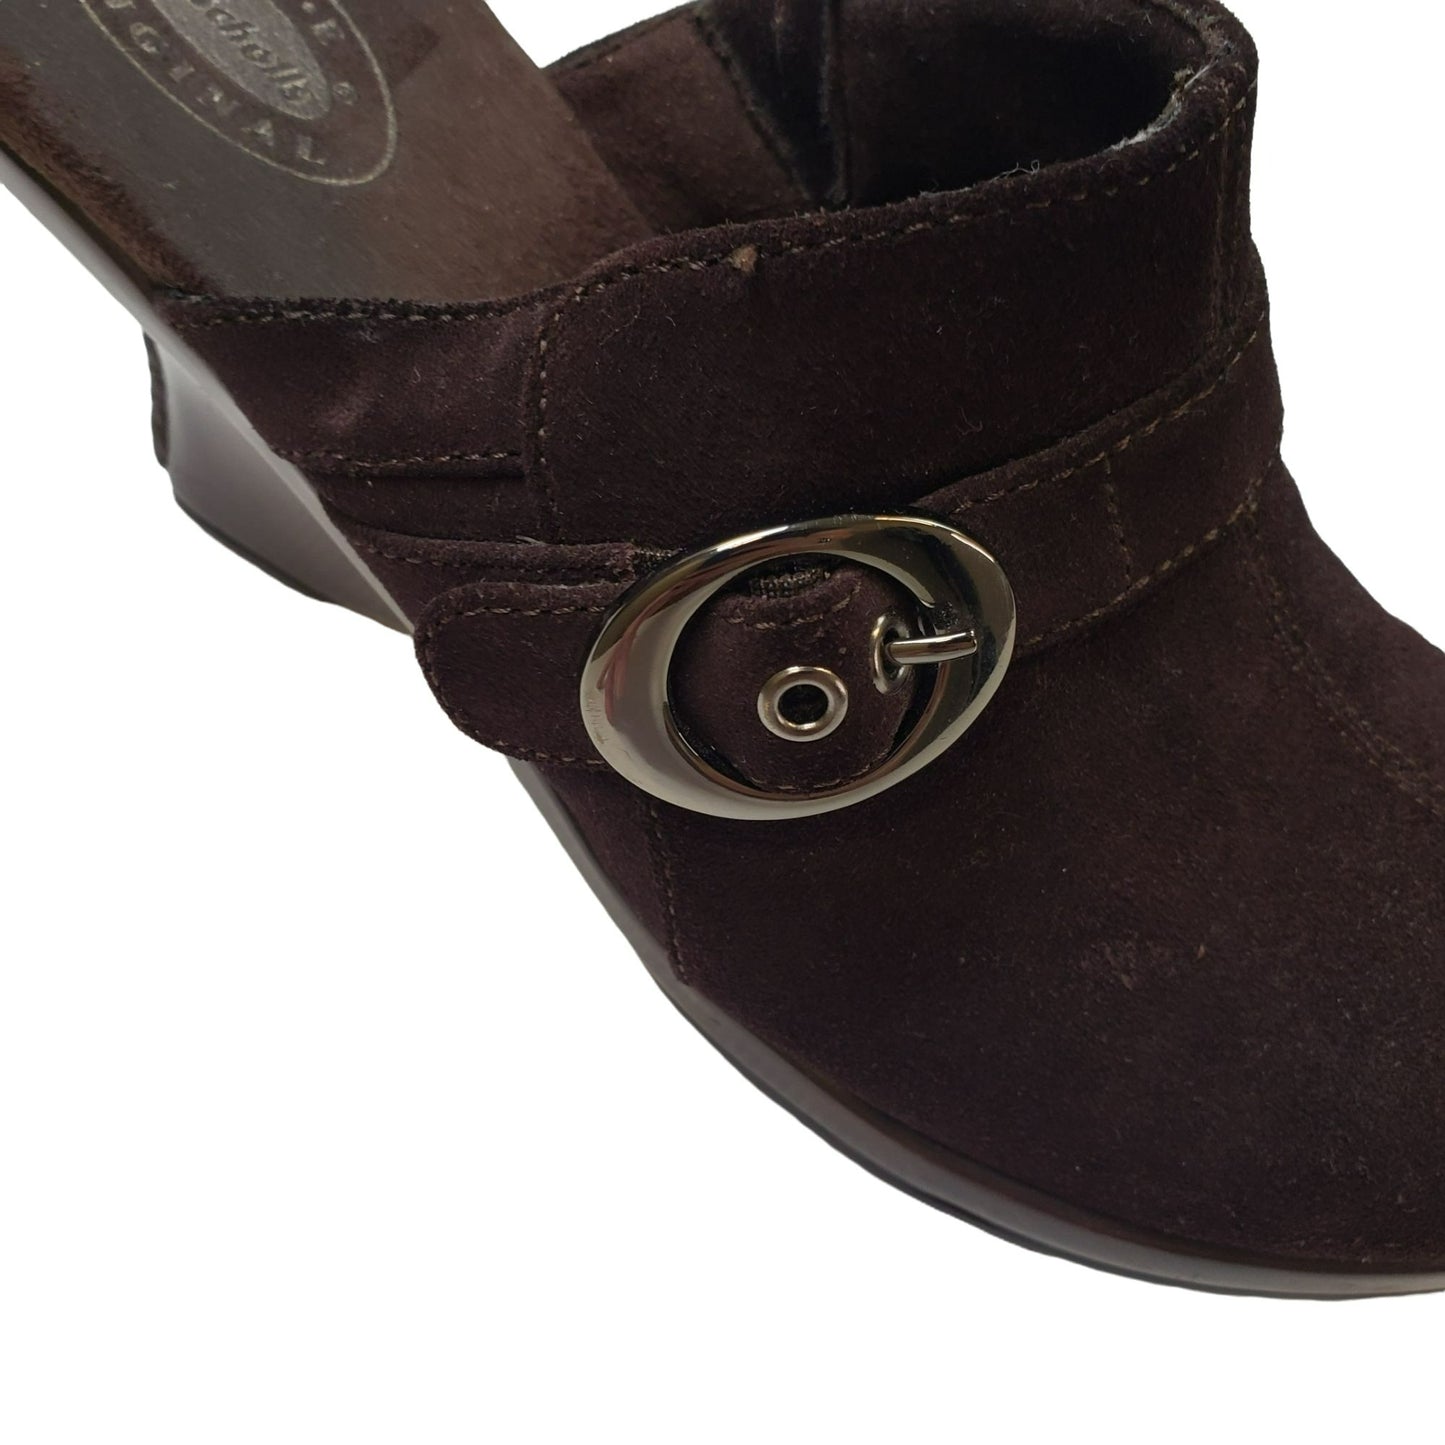 Dr. Scholl's Primid Suede Leather Mule Sandals